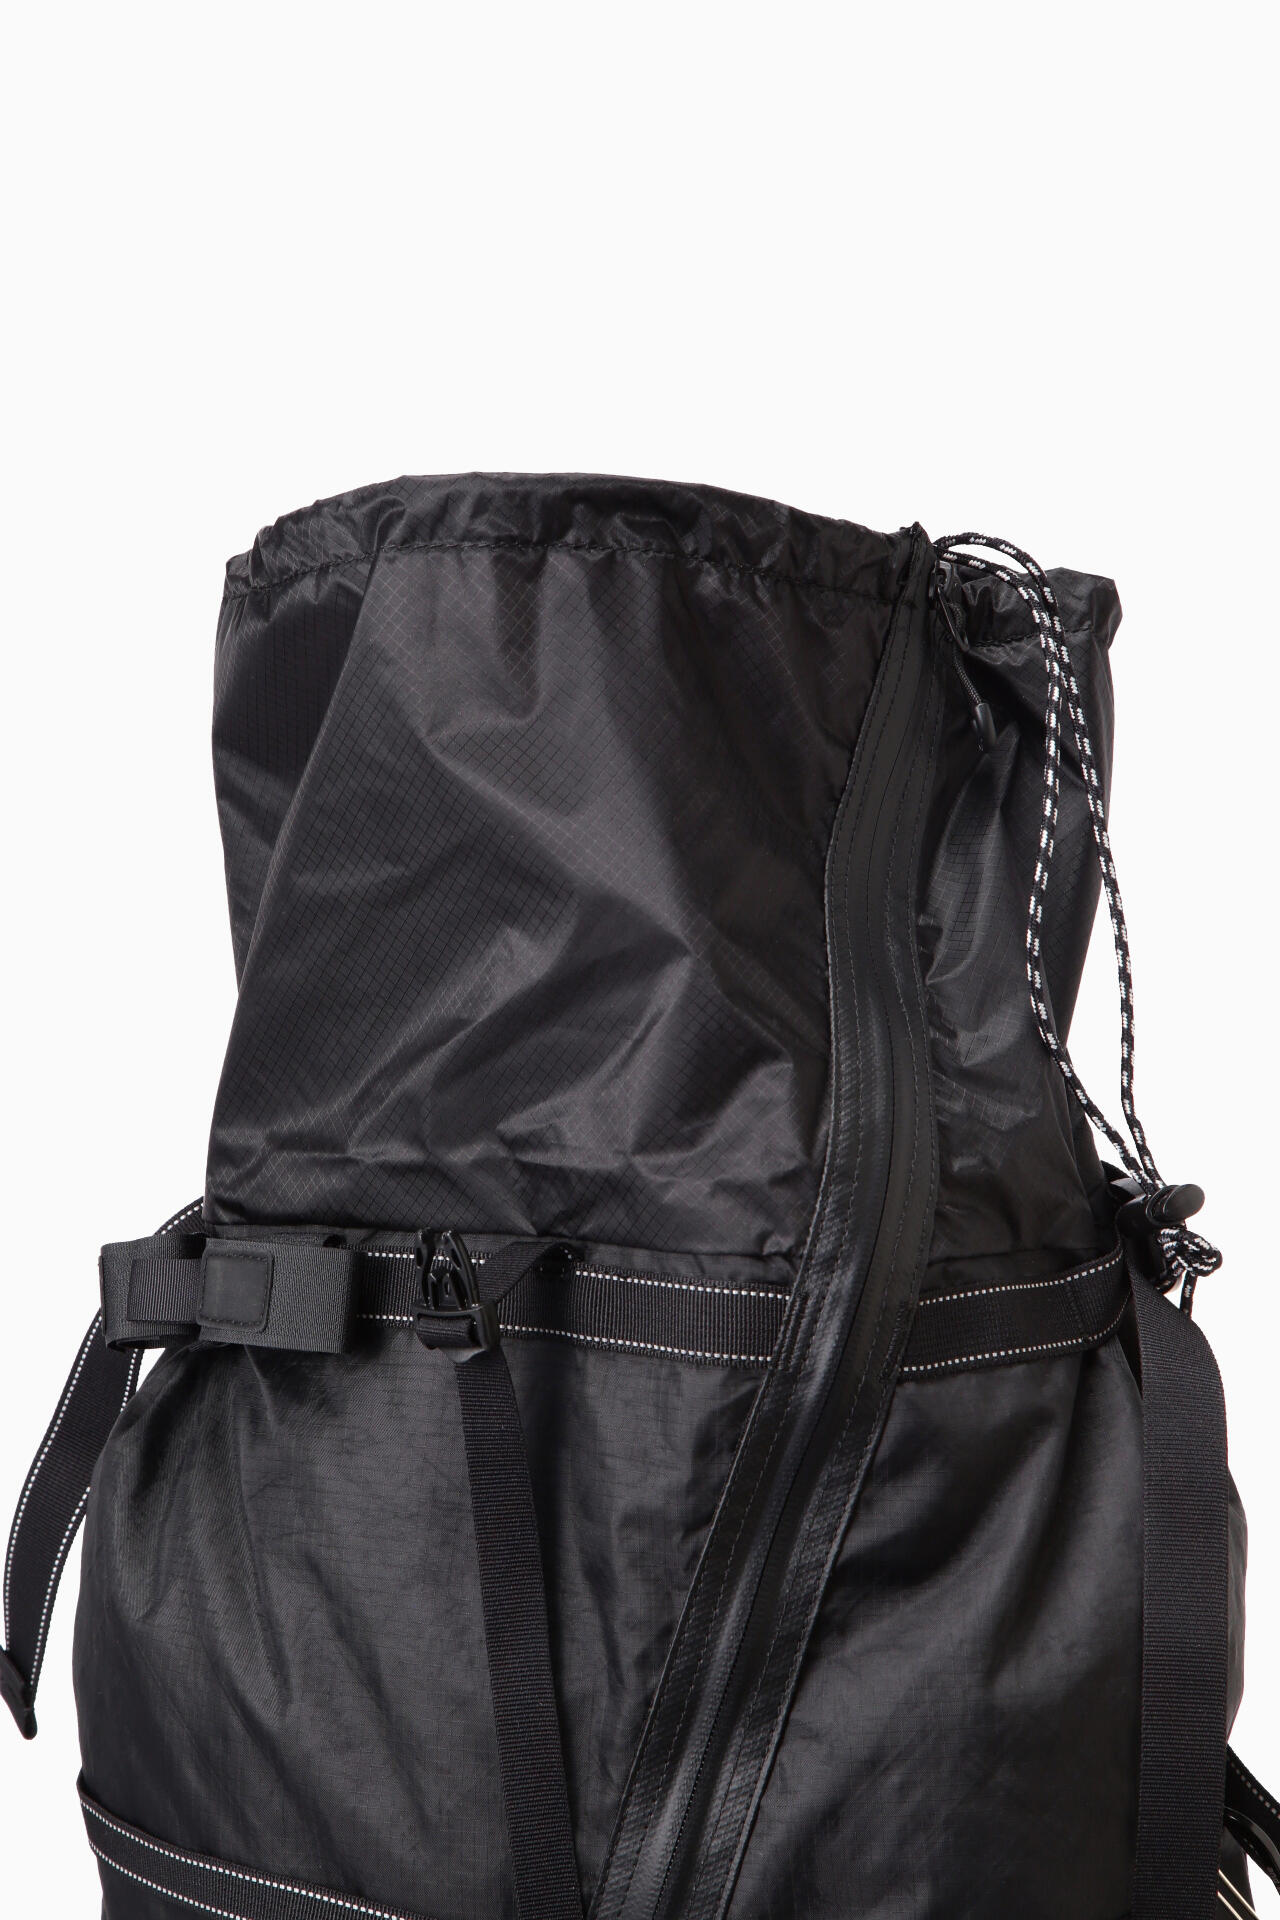 ECOPAK 40L backpack